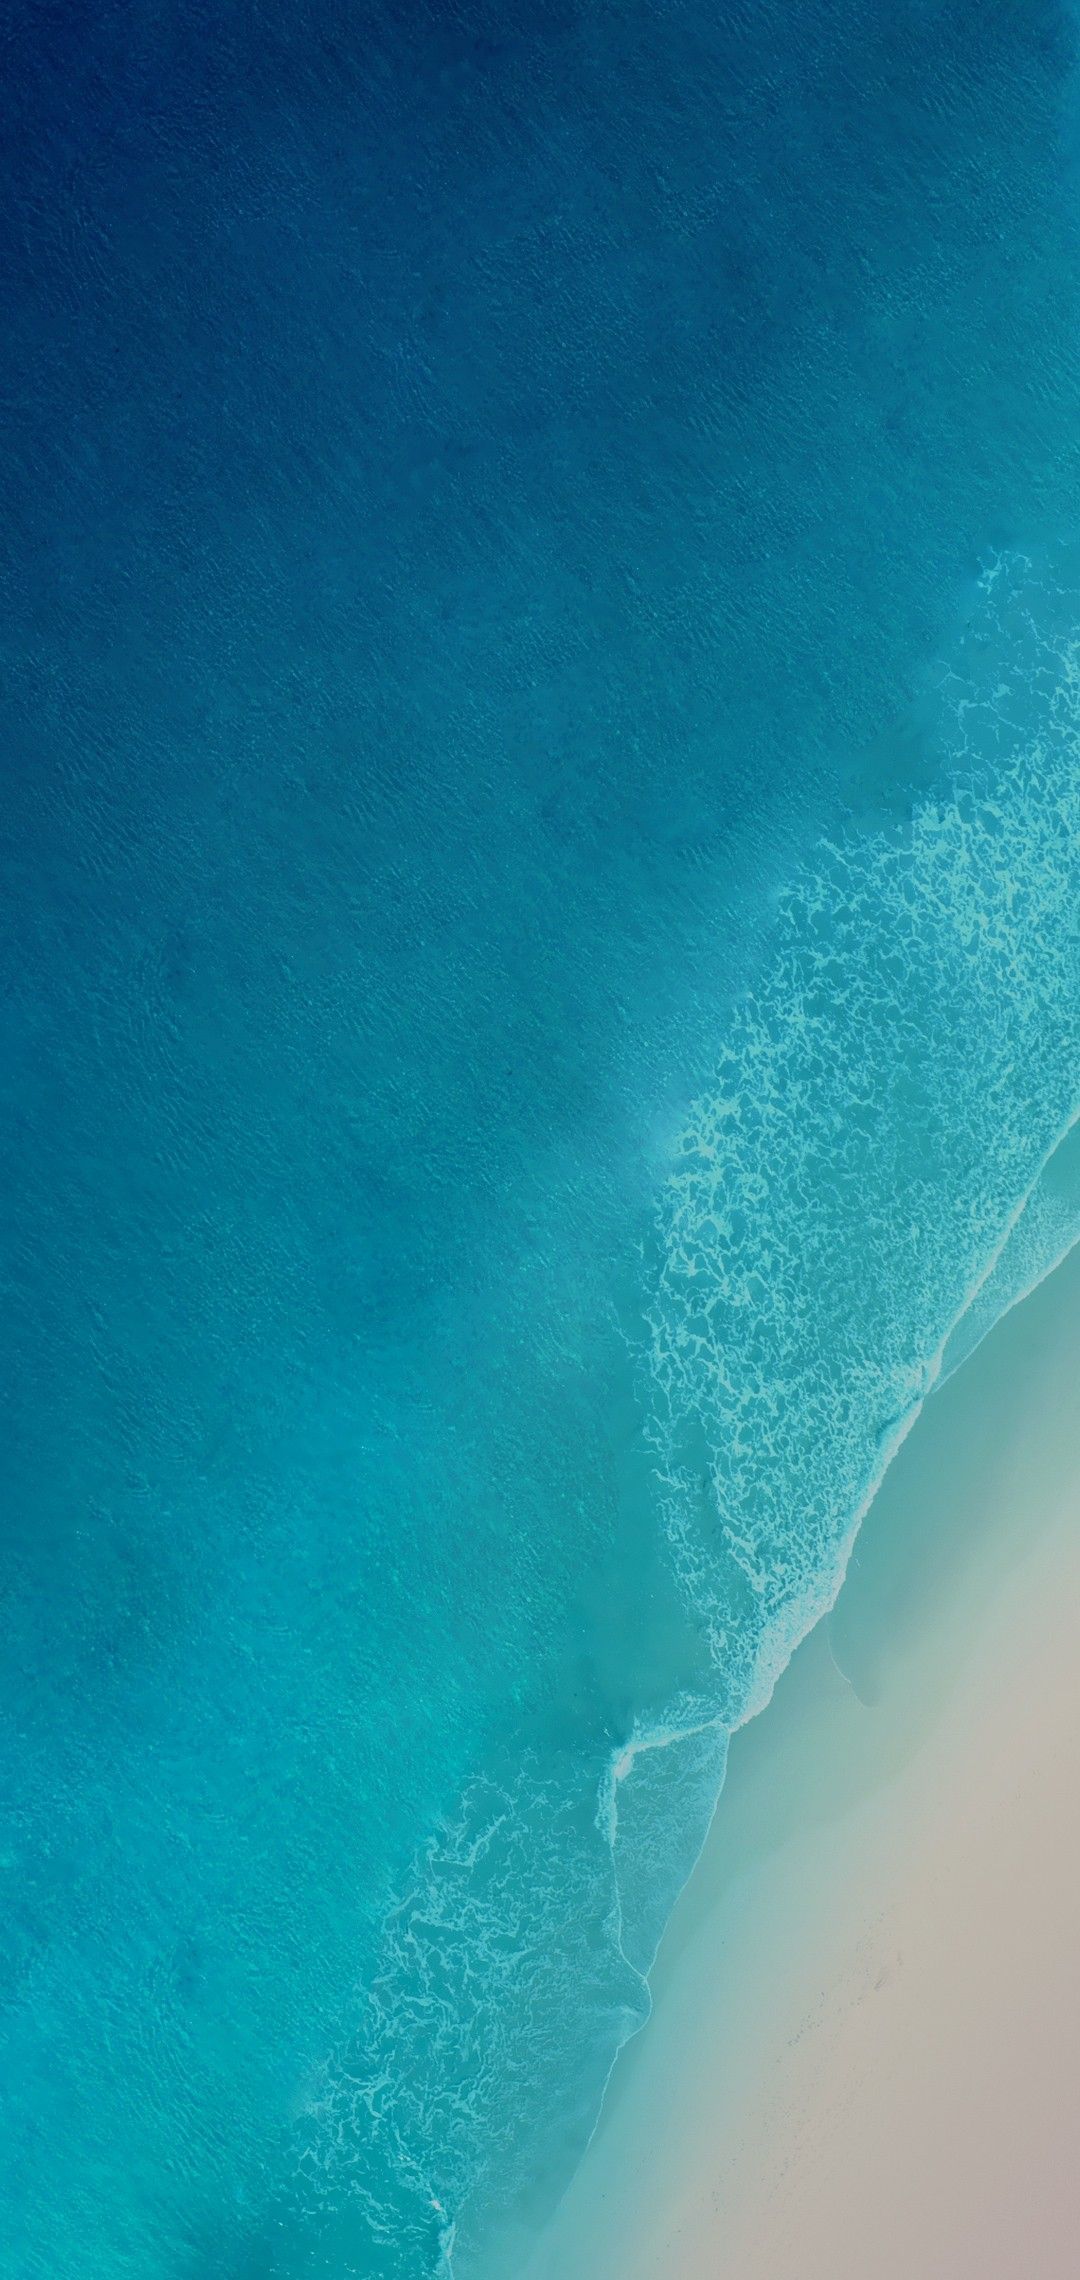 Free download iOS 12 iPhone X Aqua blue Water ocean apple